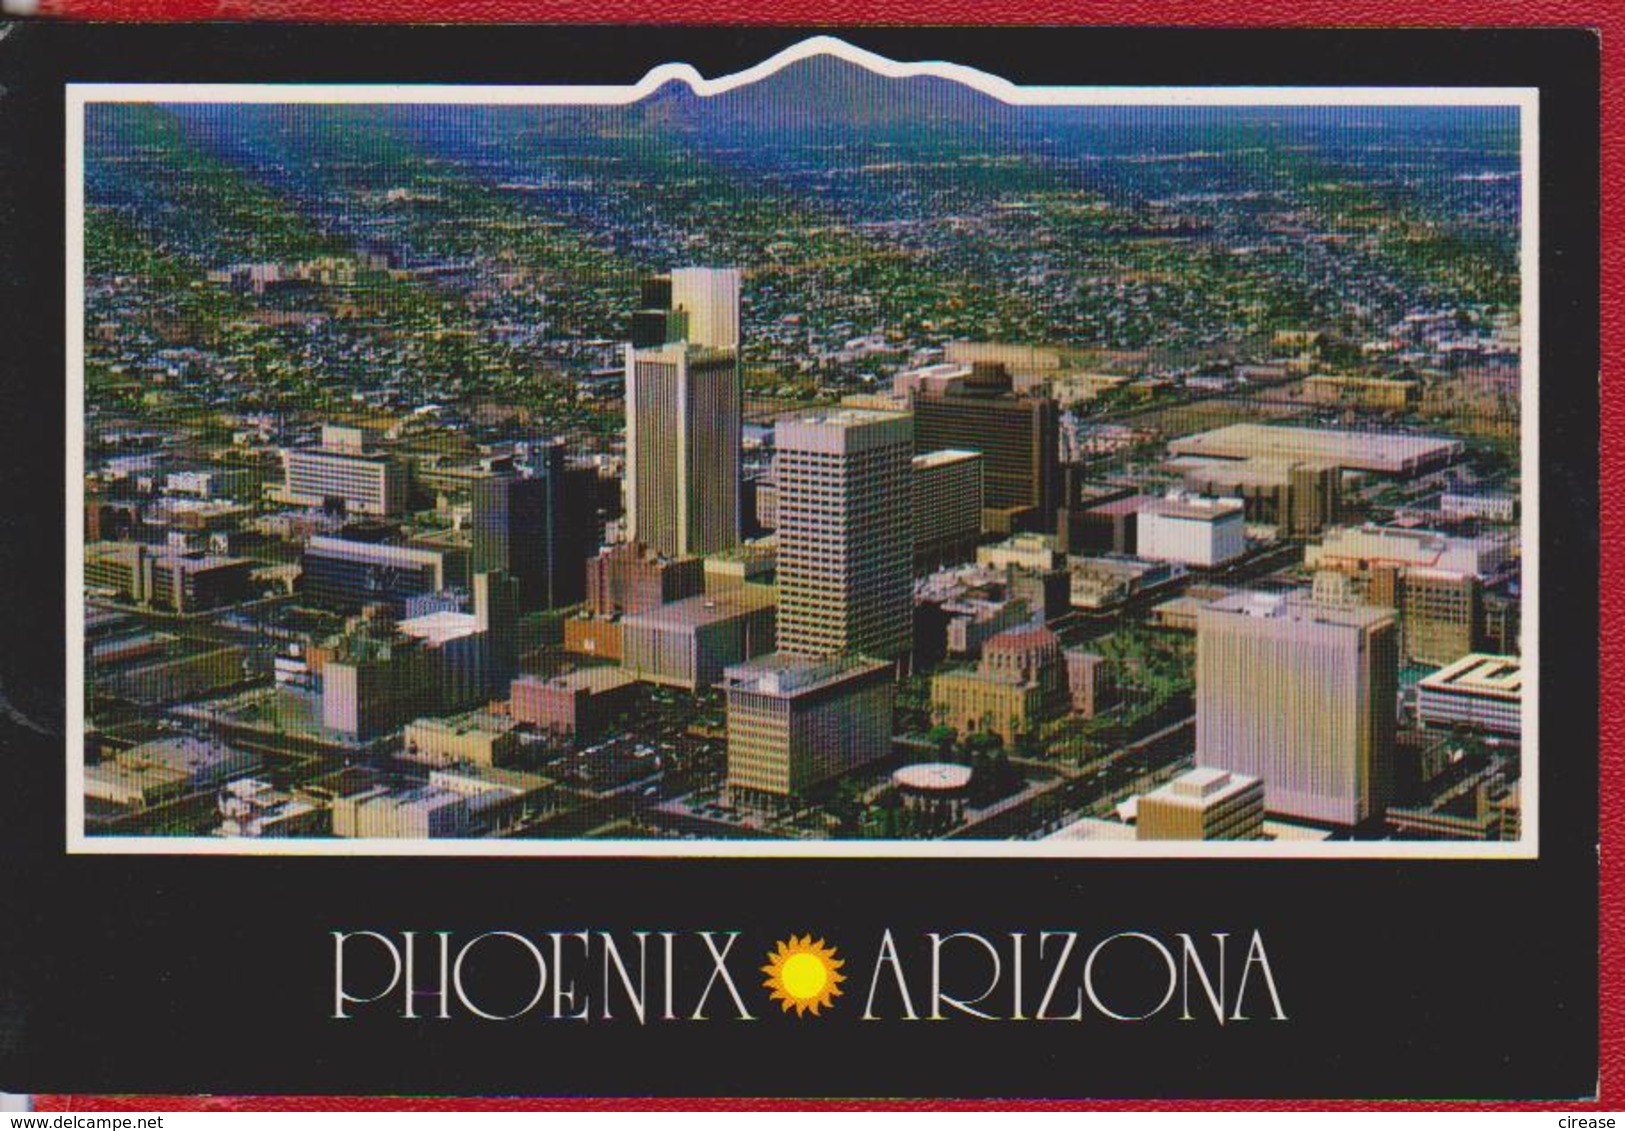 PHOENIX ARIZONA UNITED STATES POSTCARD USED - Phoenix